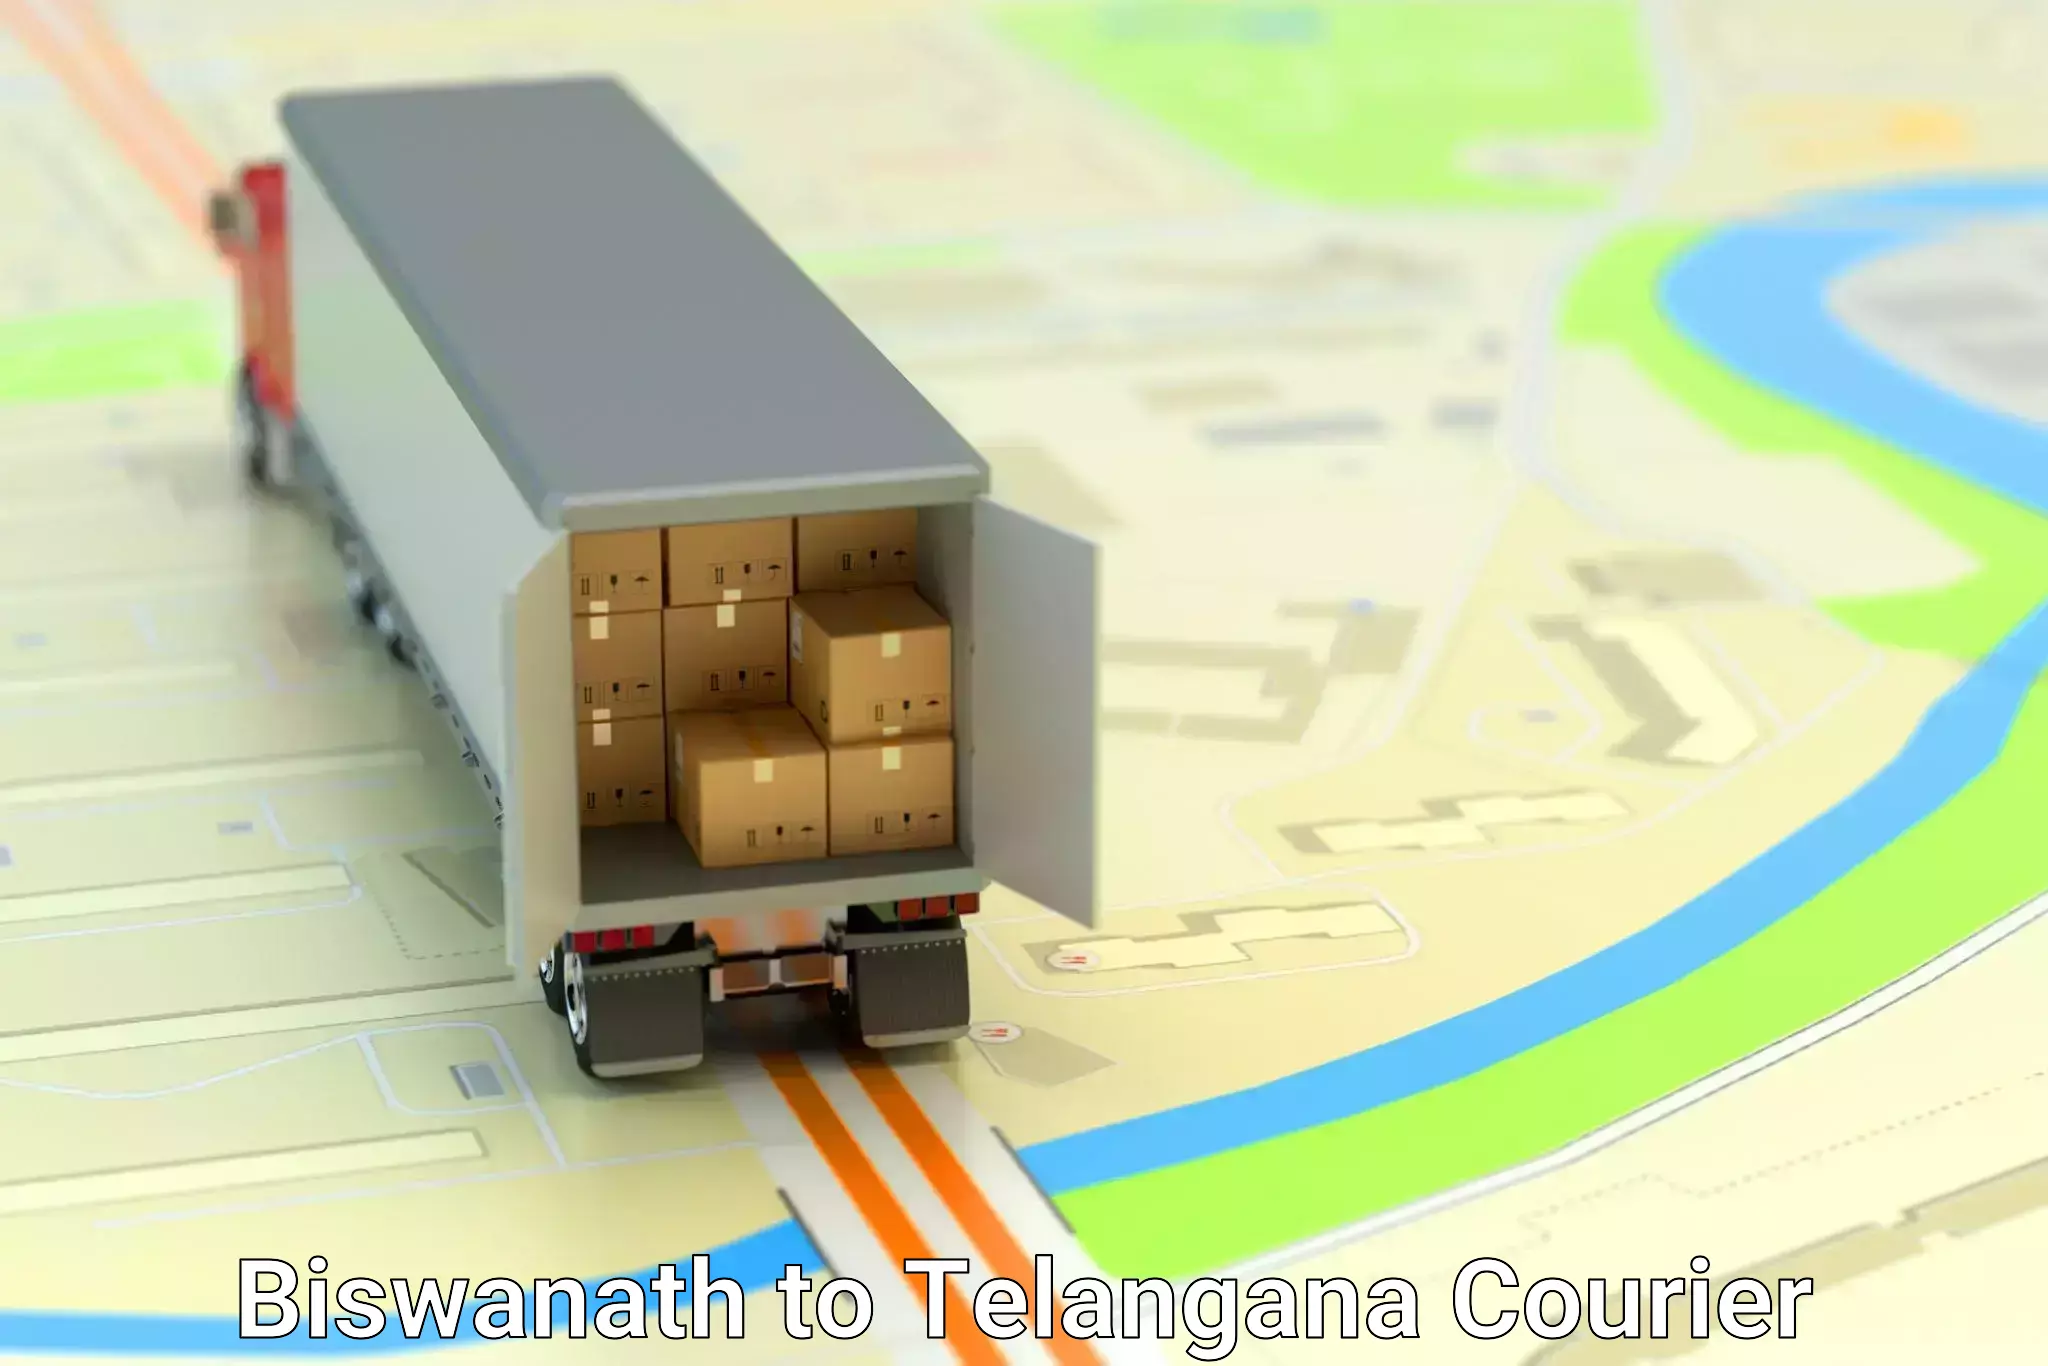 Global shipping networks Biswanath to Telangana